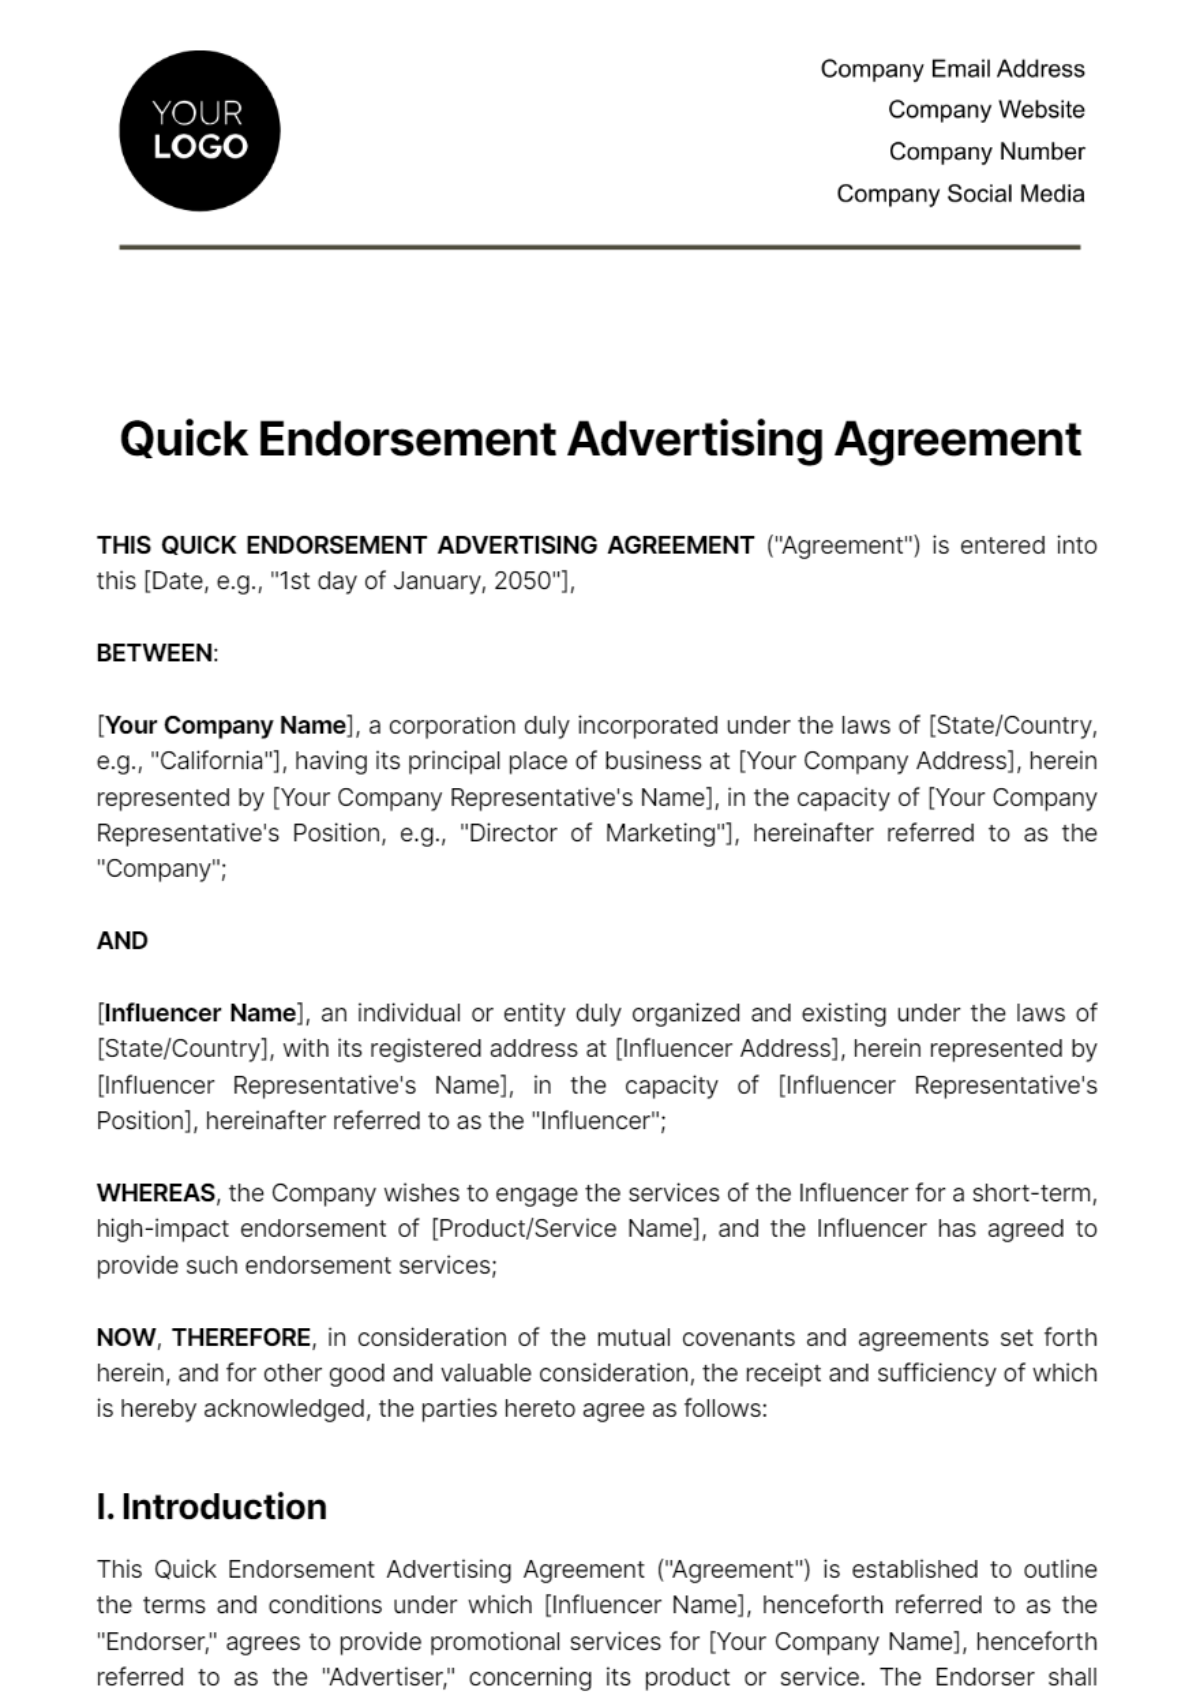 Free Quick Endorsement Advertising Agreement Template